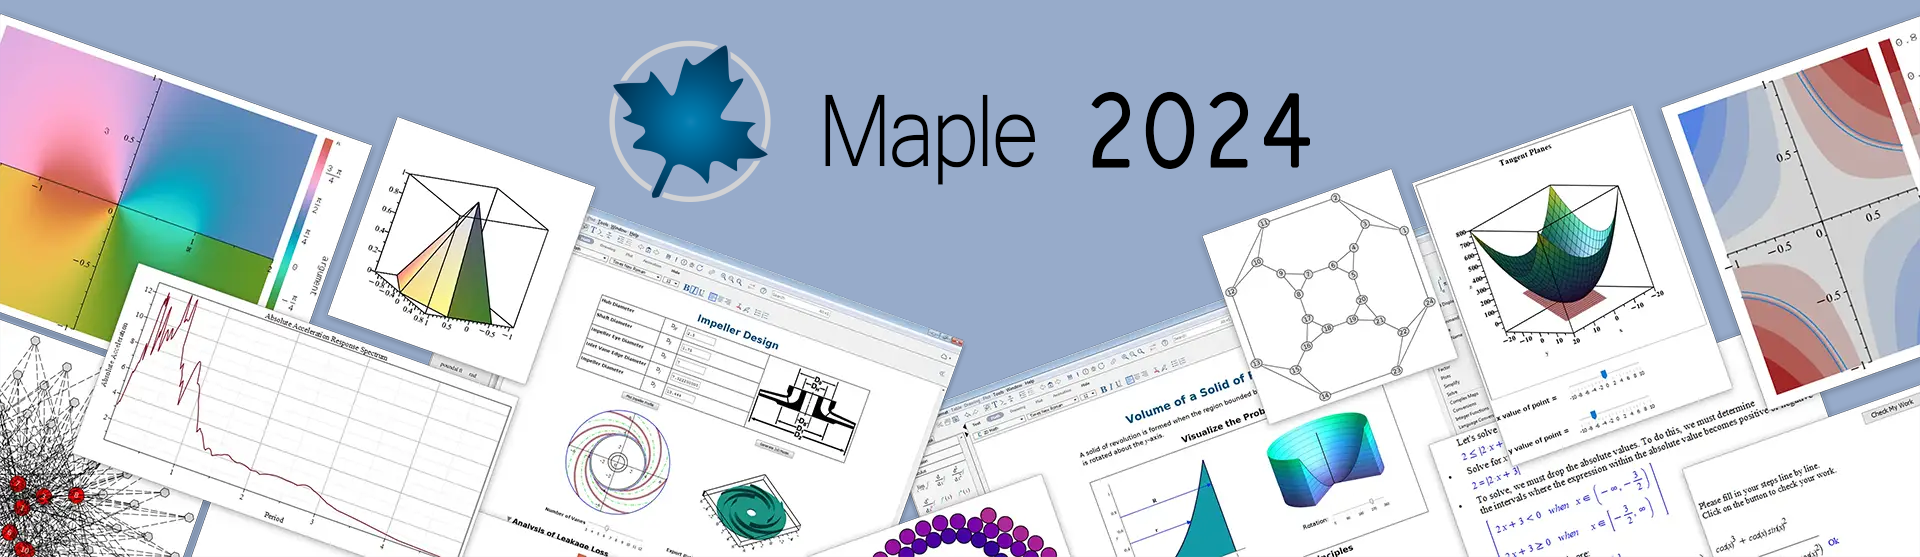 ¡Presentamos Maple 2024!